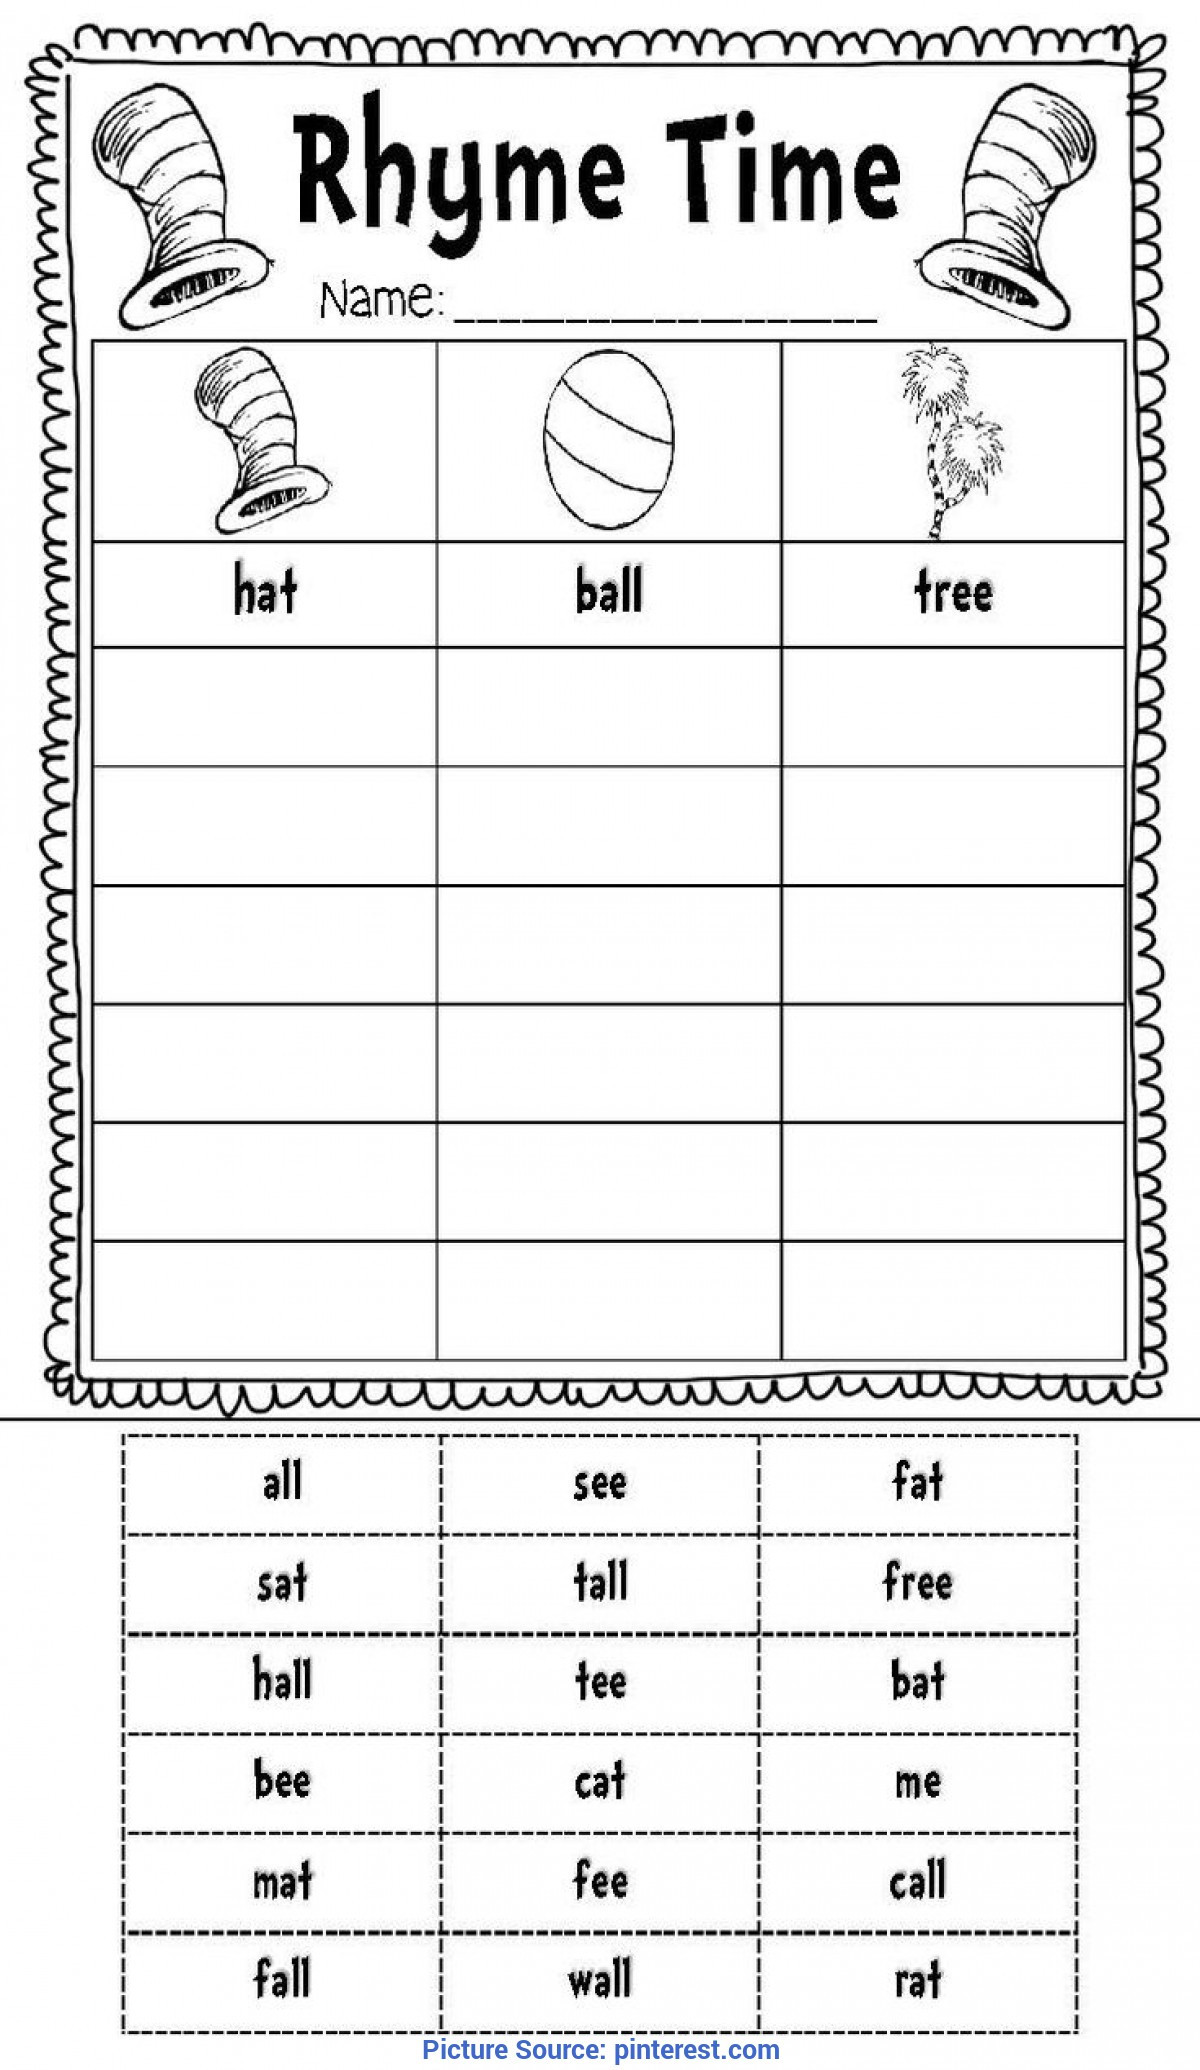 Dr Seuss Lesson Plans Preschool Regular Creative Curriculum Lesson Plans Template 12